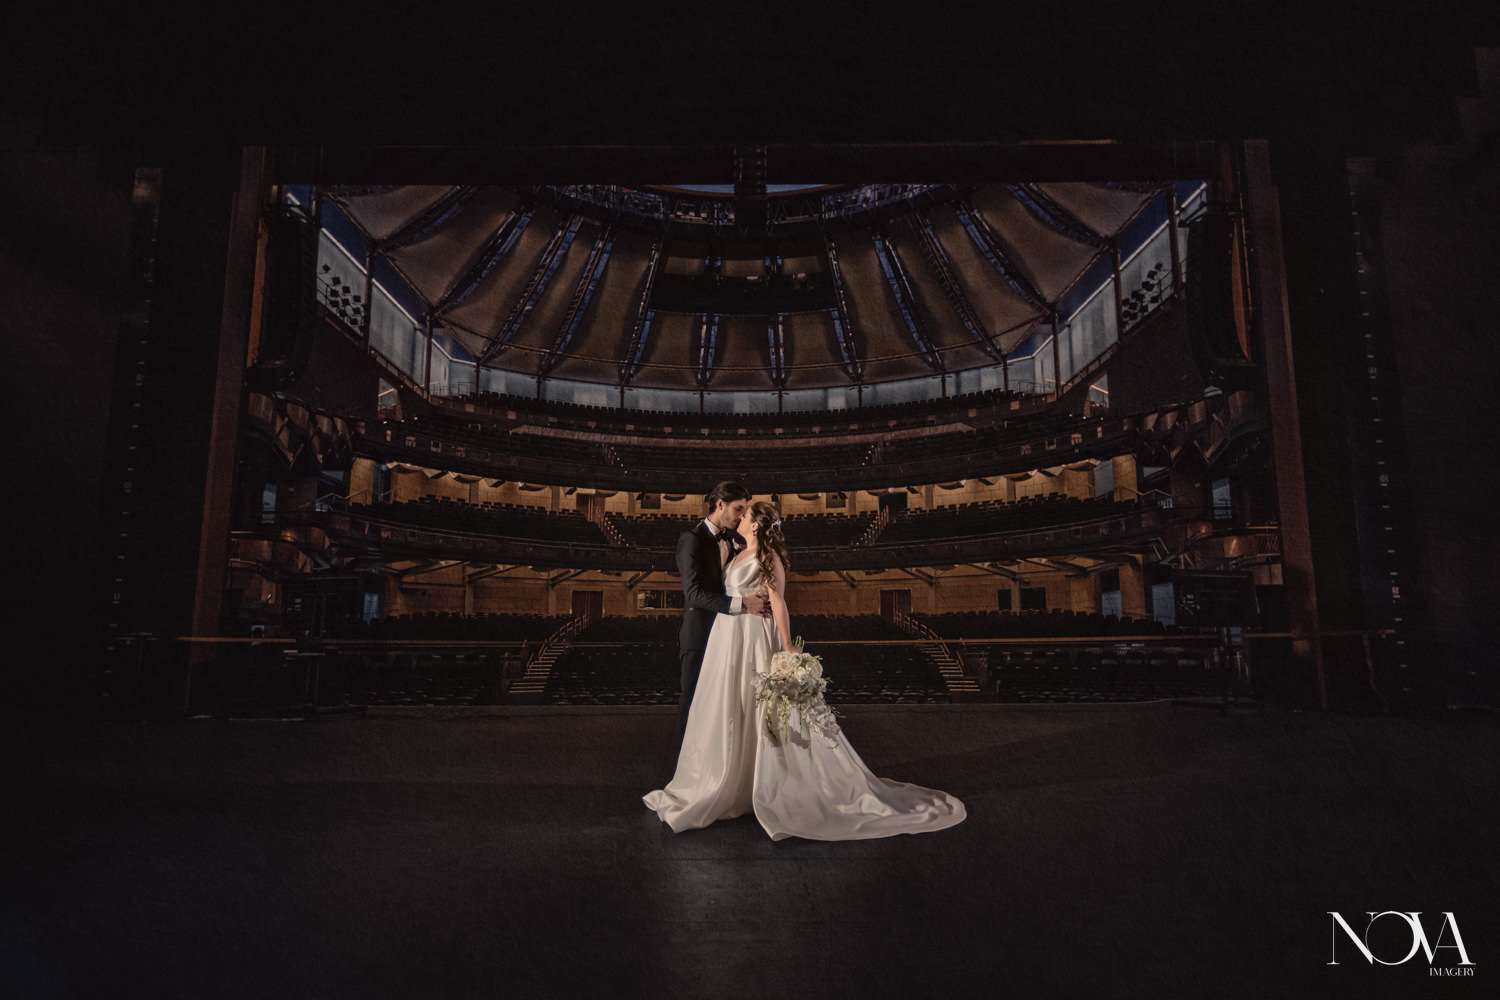 Nova imagery captures wedding portrait inside of Dr Phillips Center